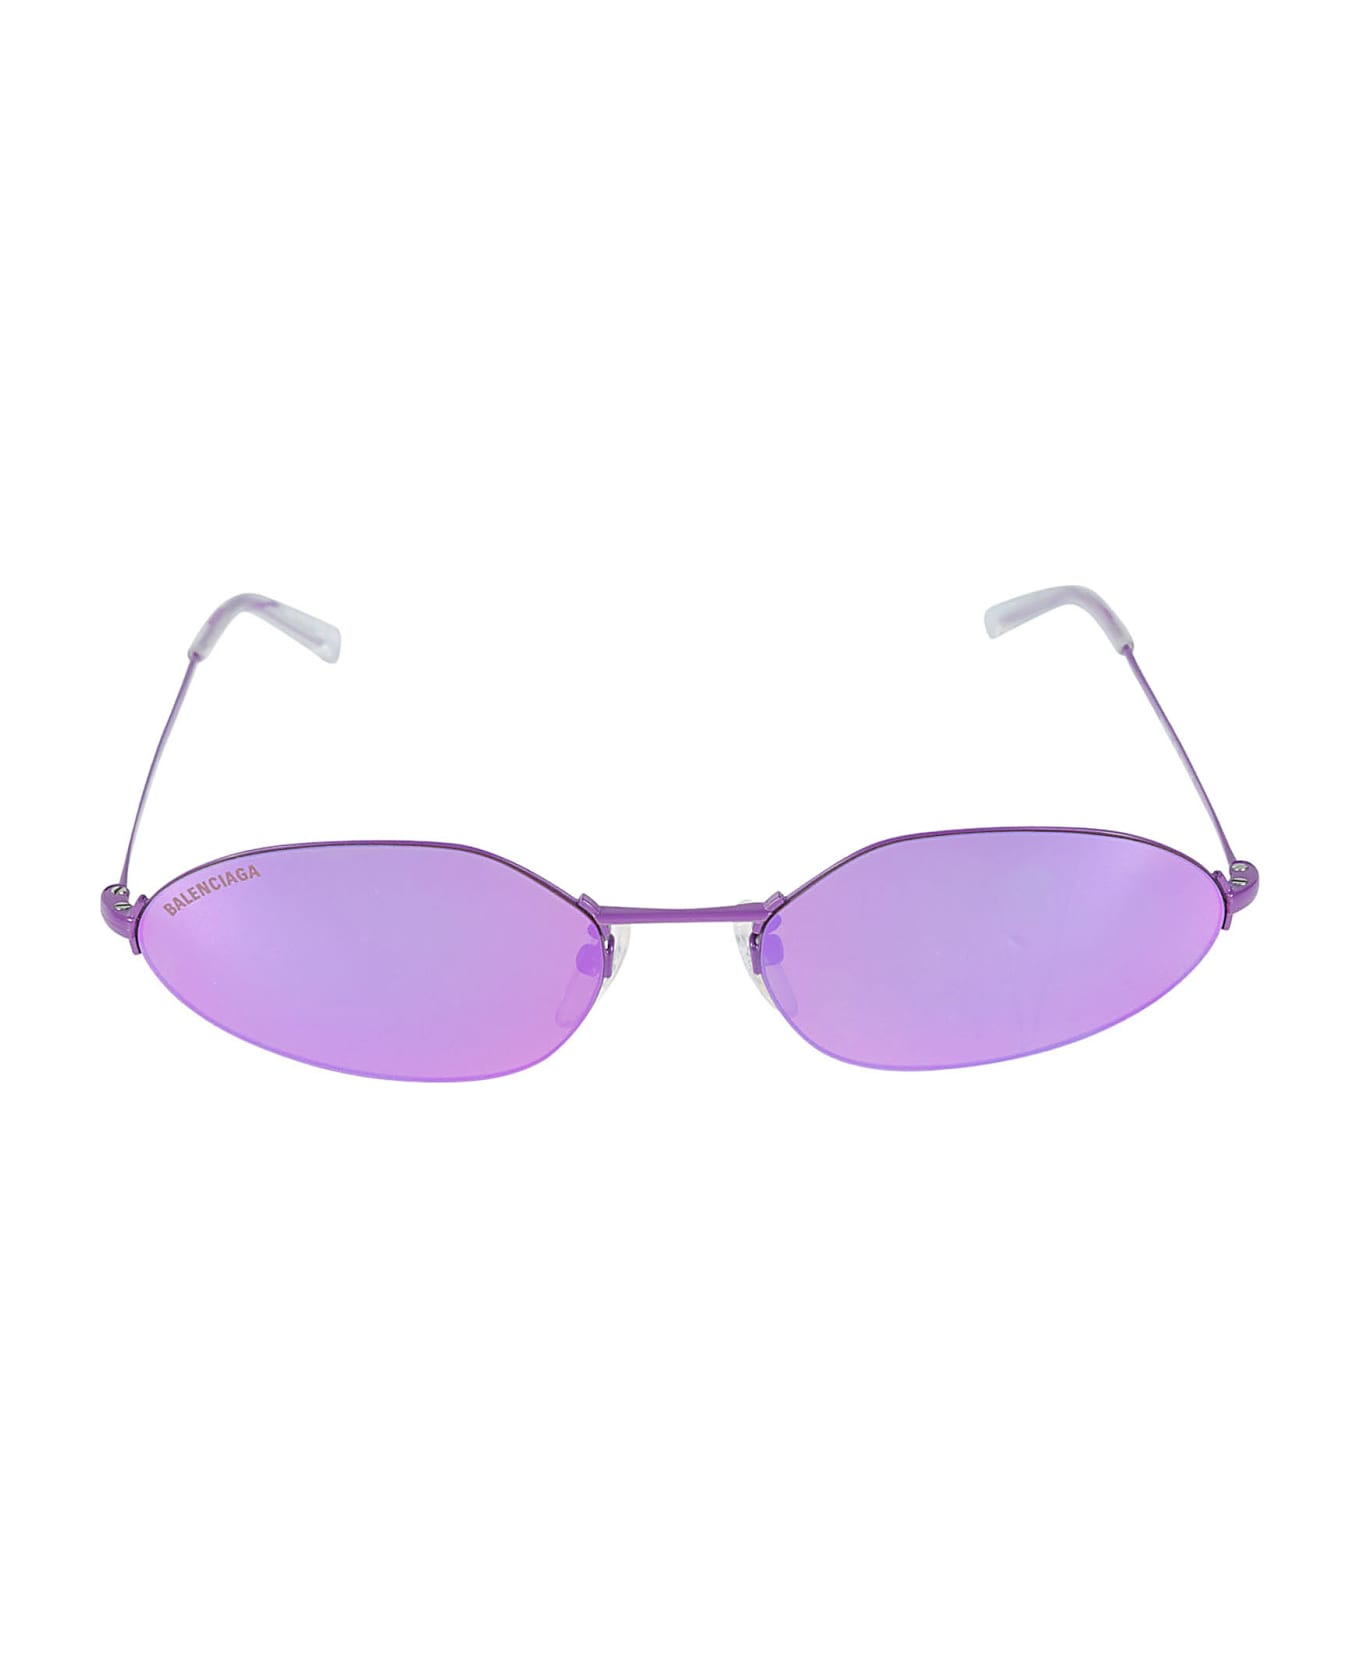 Balenciaga Eyewear Logo Frame Briranyth Sunglasses - Violet